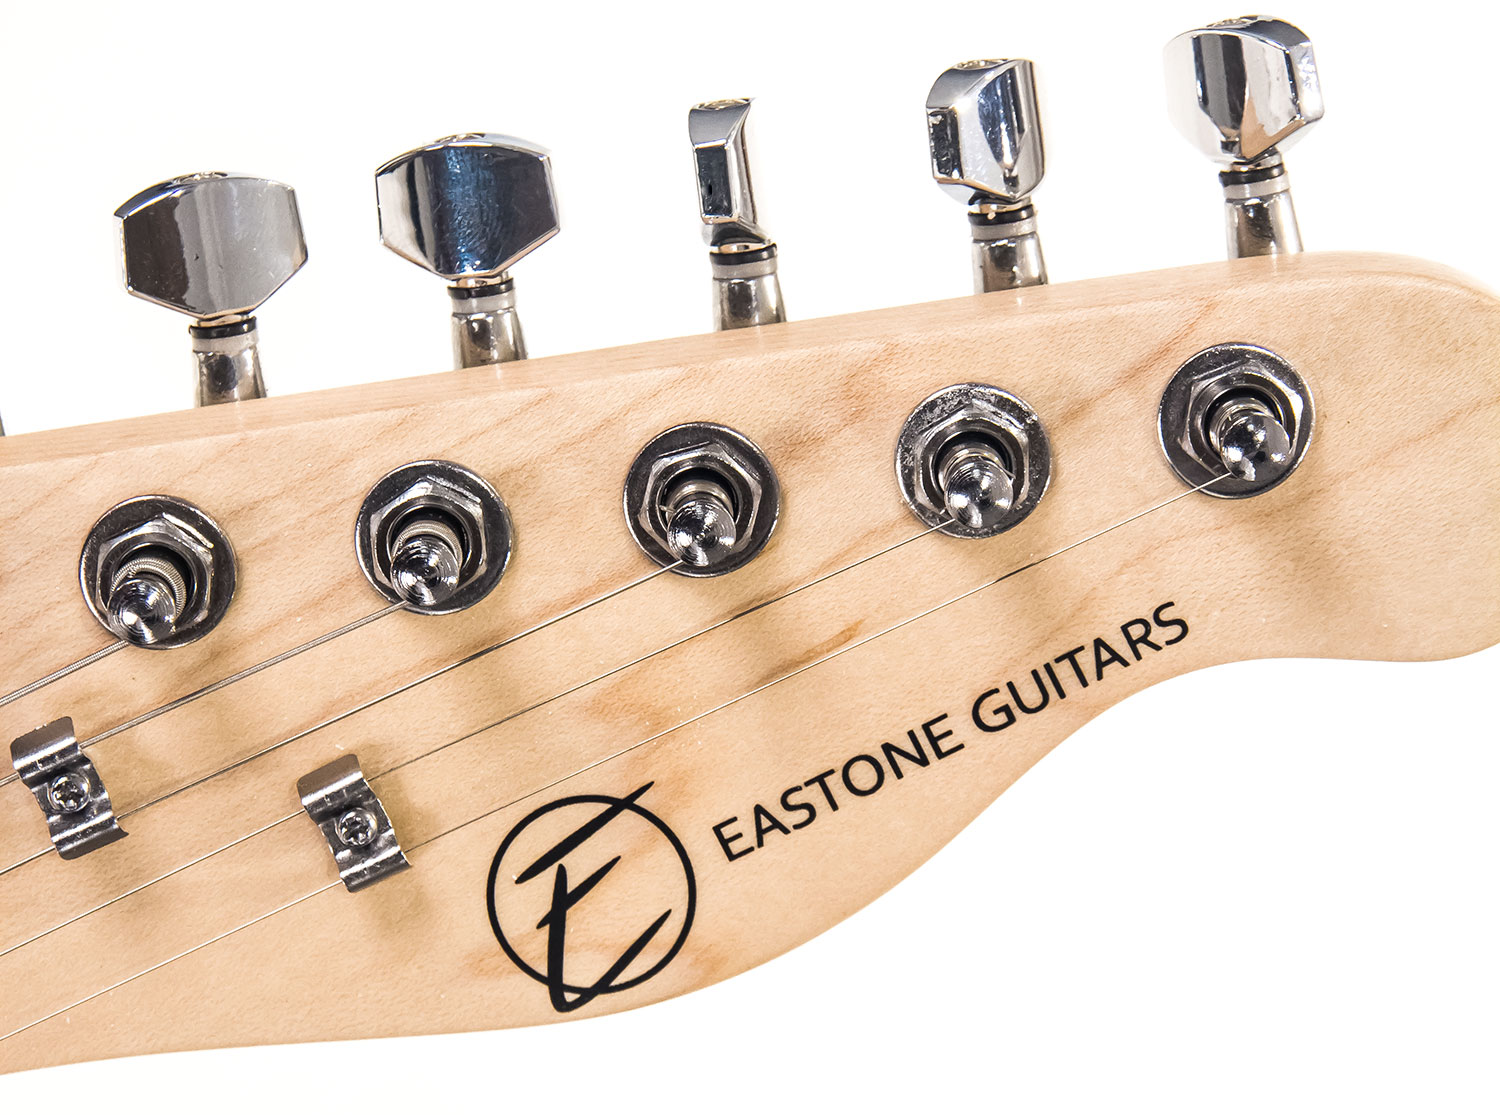 Eastone Tl70 Ss Ht Pur - 3 Tone Sunburst - Televorm elektrische gitaar - Variation 4